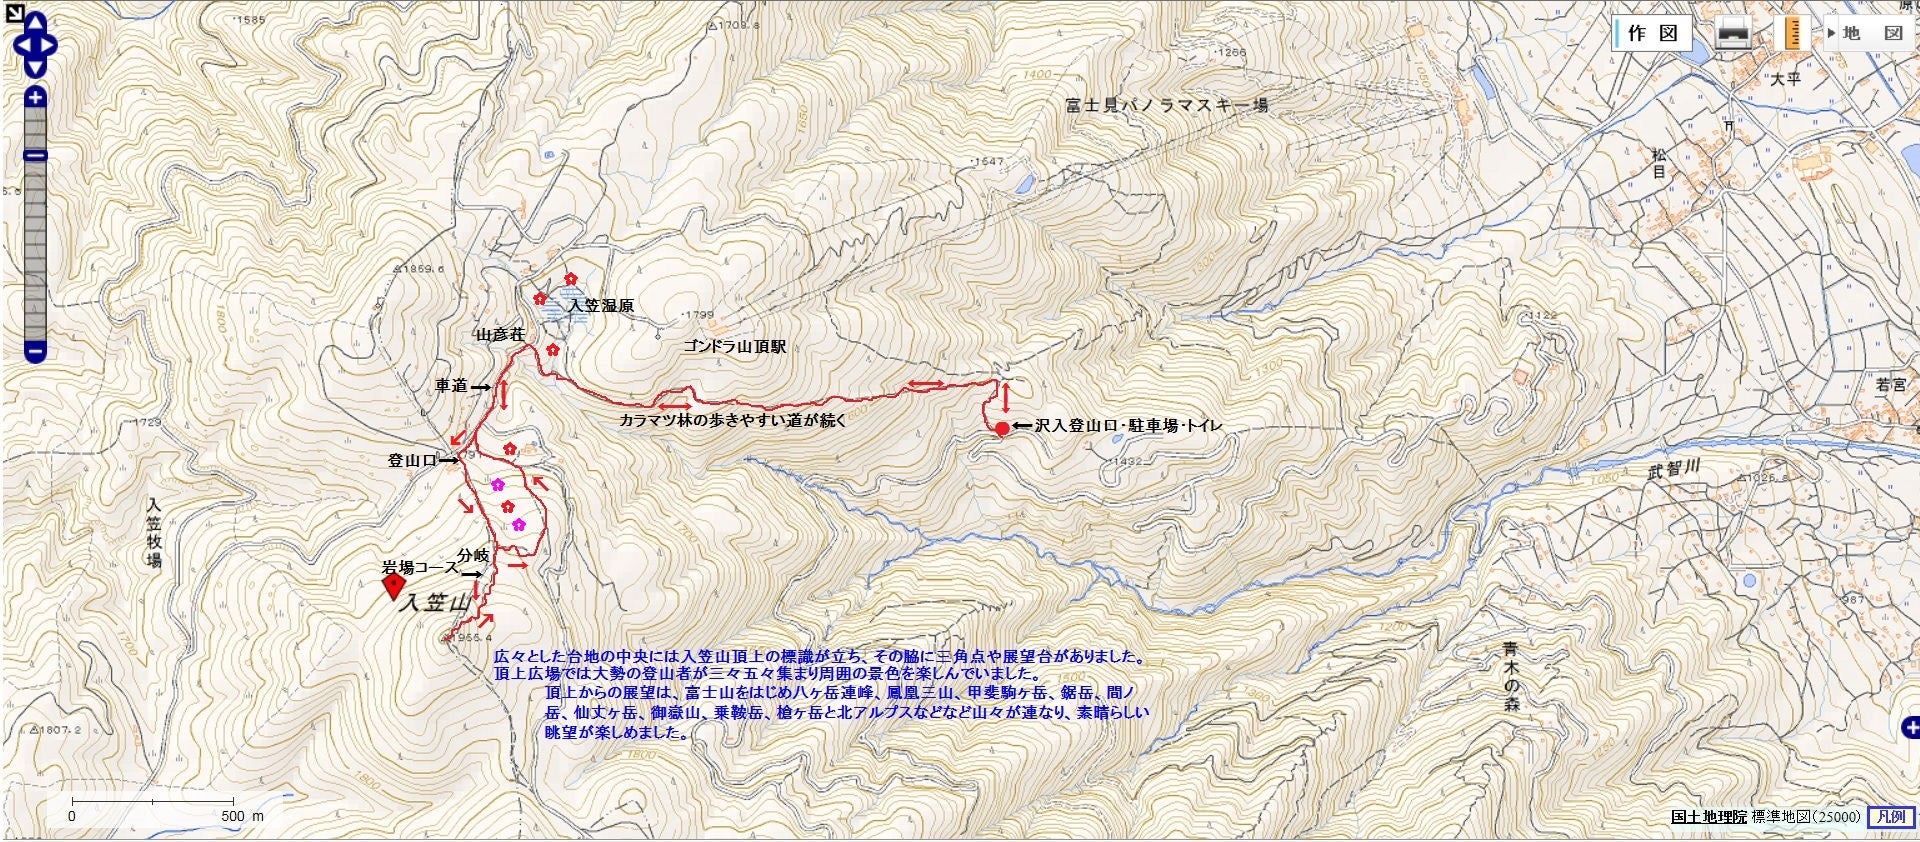 入笠山 長野県 1955 4m 14 10 25 天気 夫婦登山隊のブログ